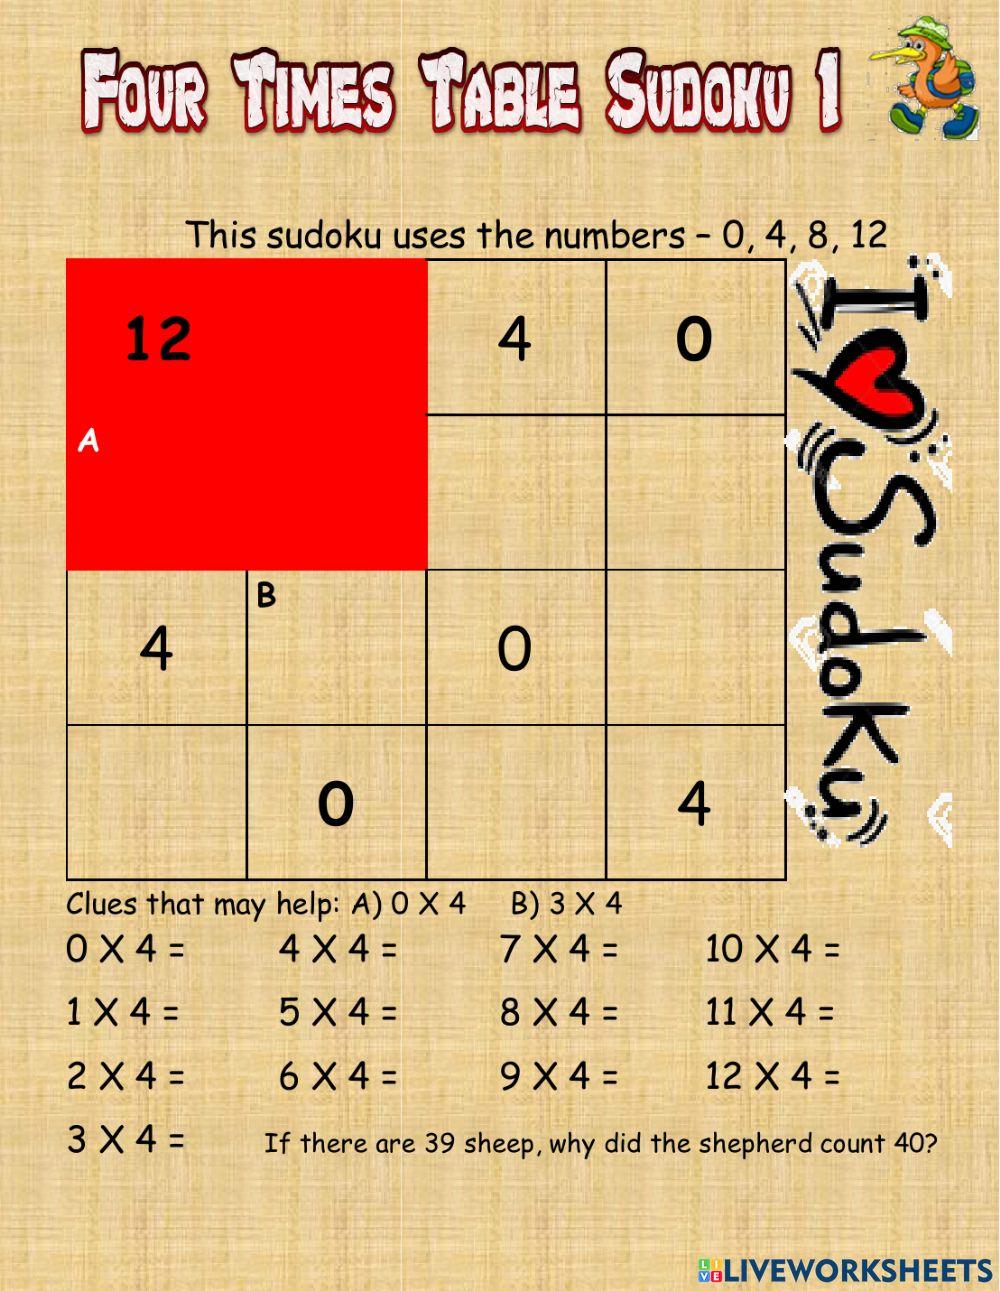 Four Times Table Sudoku 1